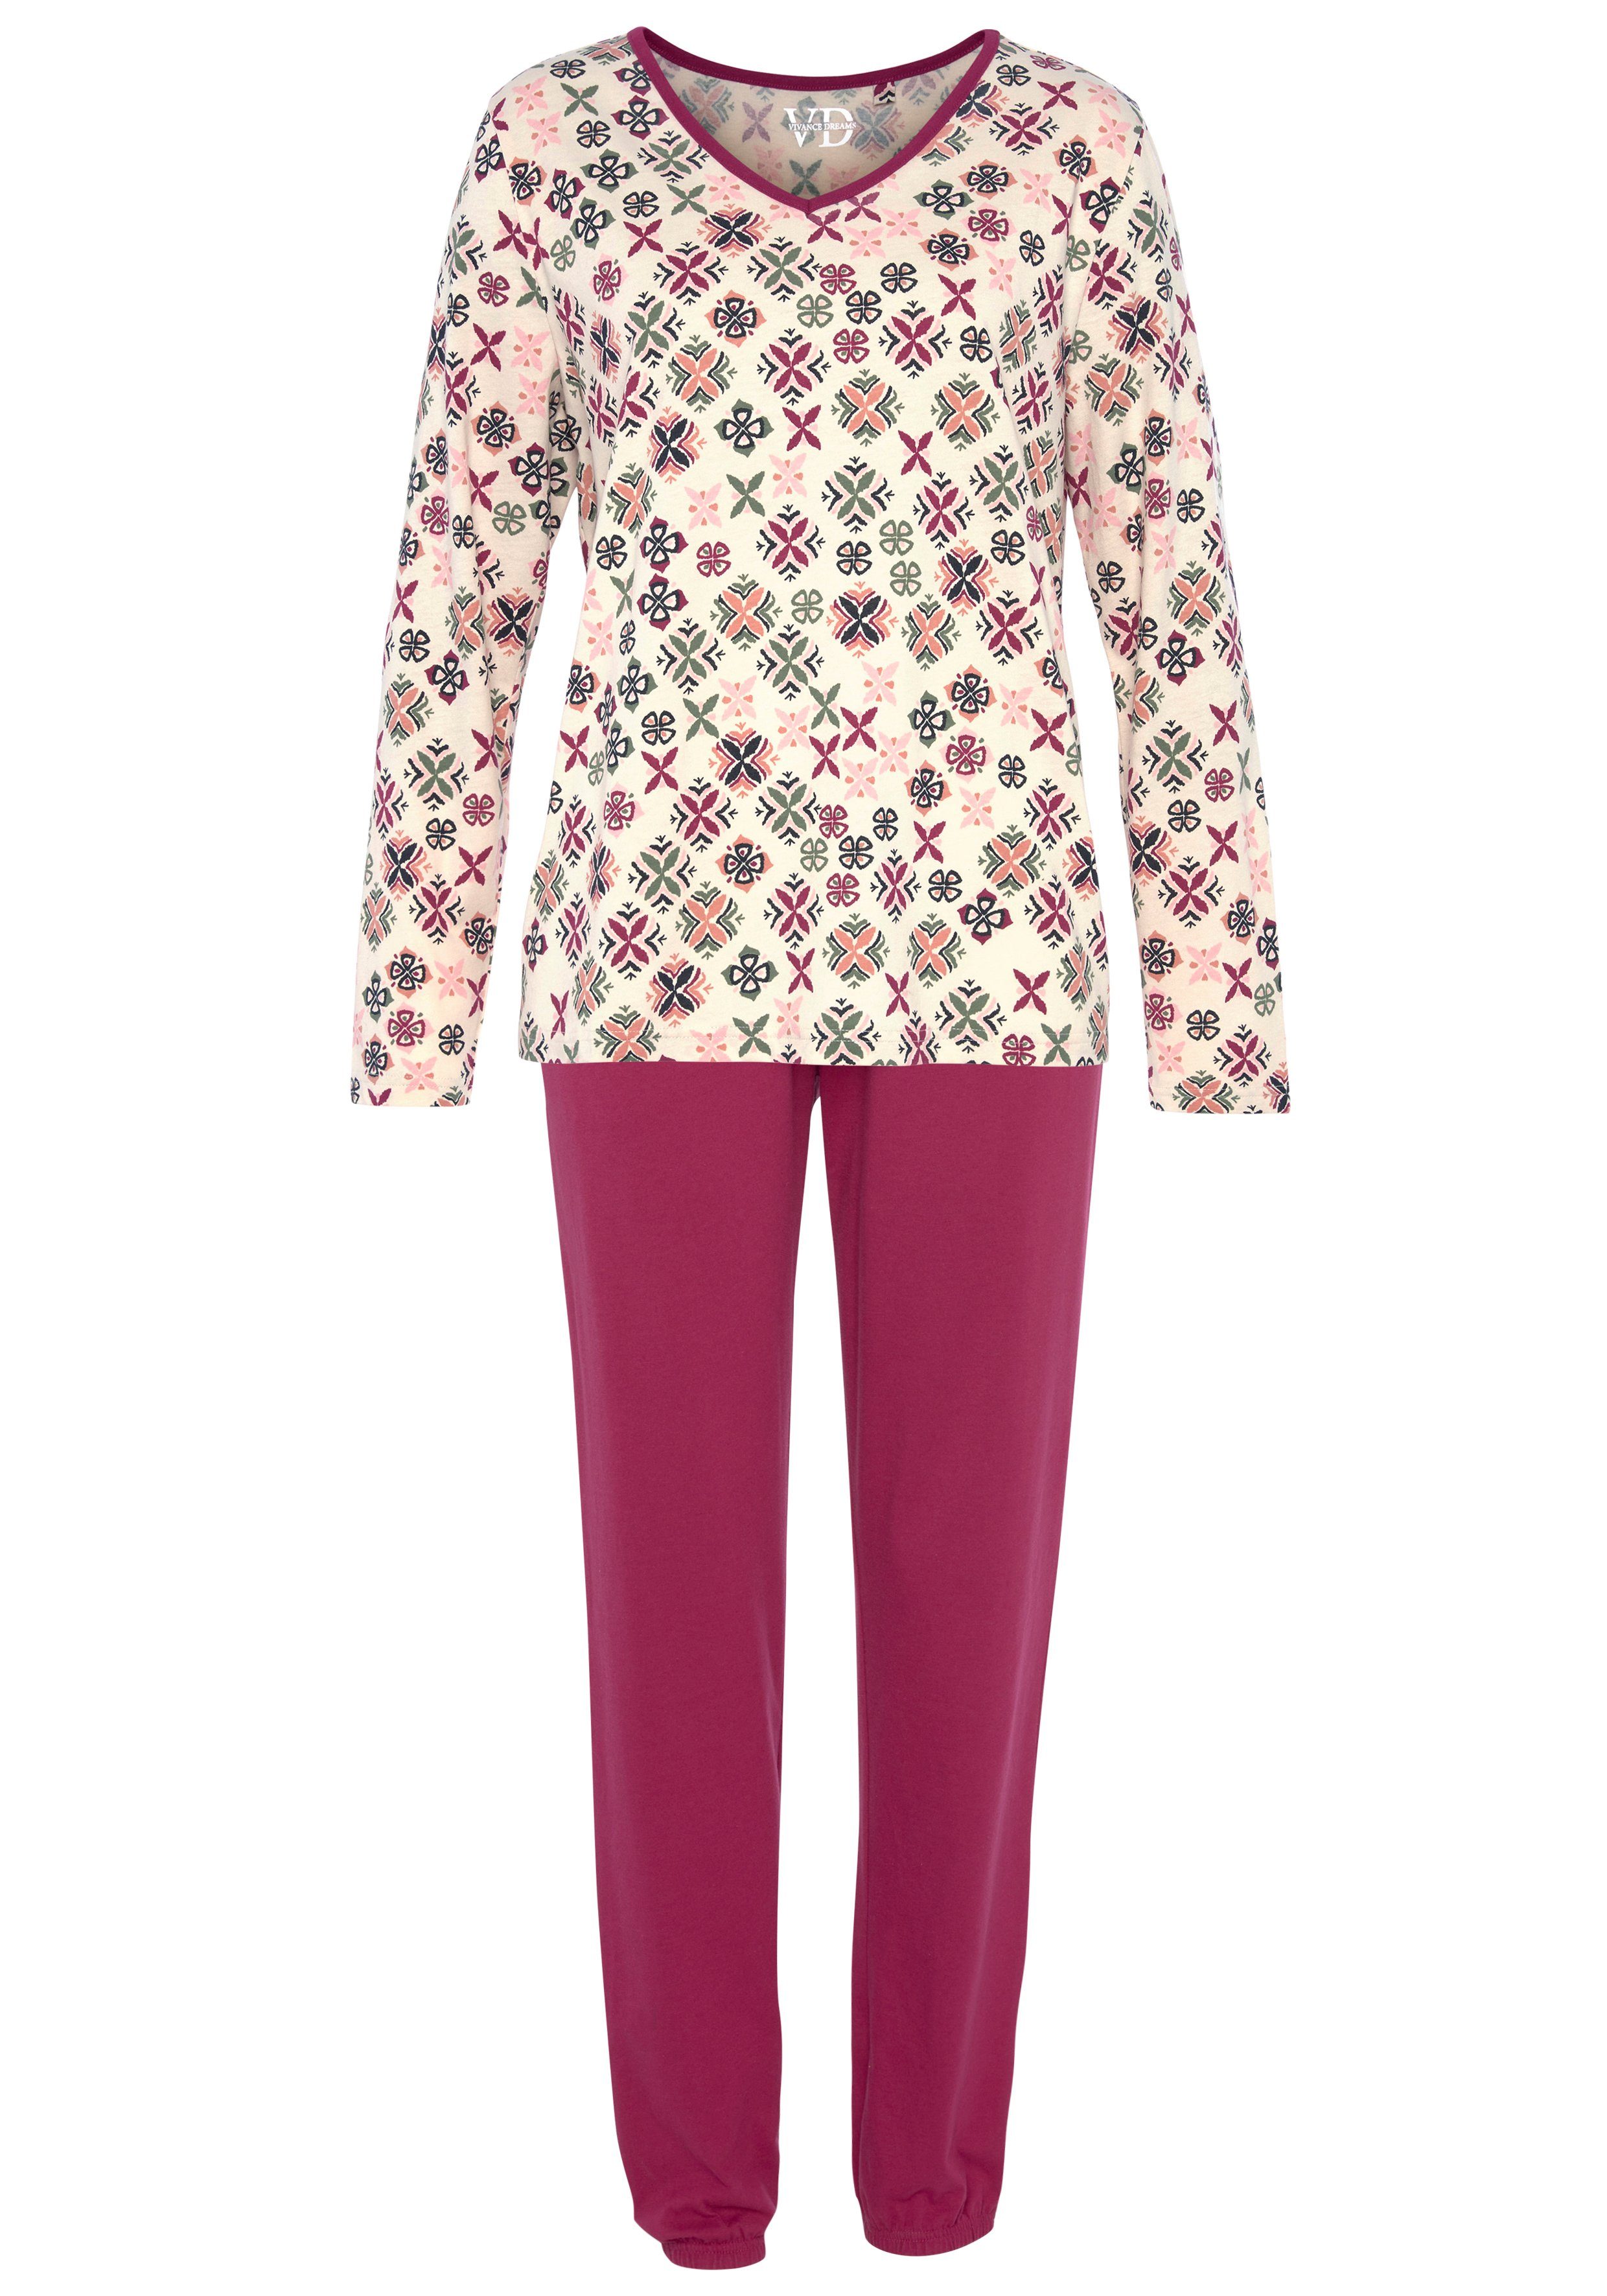 Alloverdruck Dreams Vivance burgunder-gemustert tlg) Pyjama (Packung, mit grafisch-floralem 2